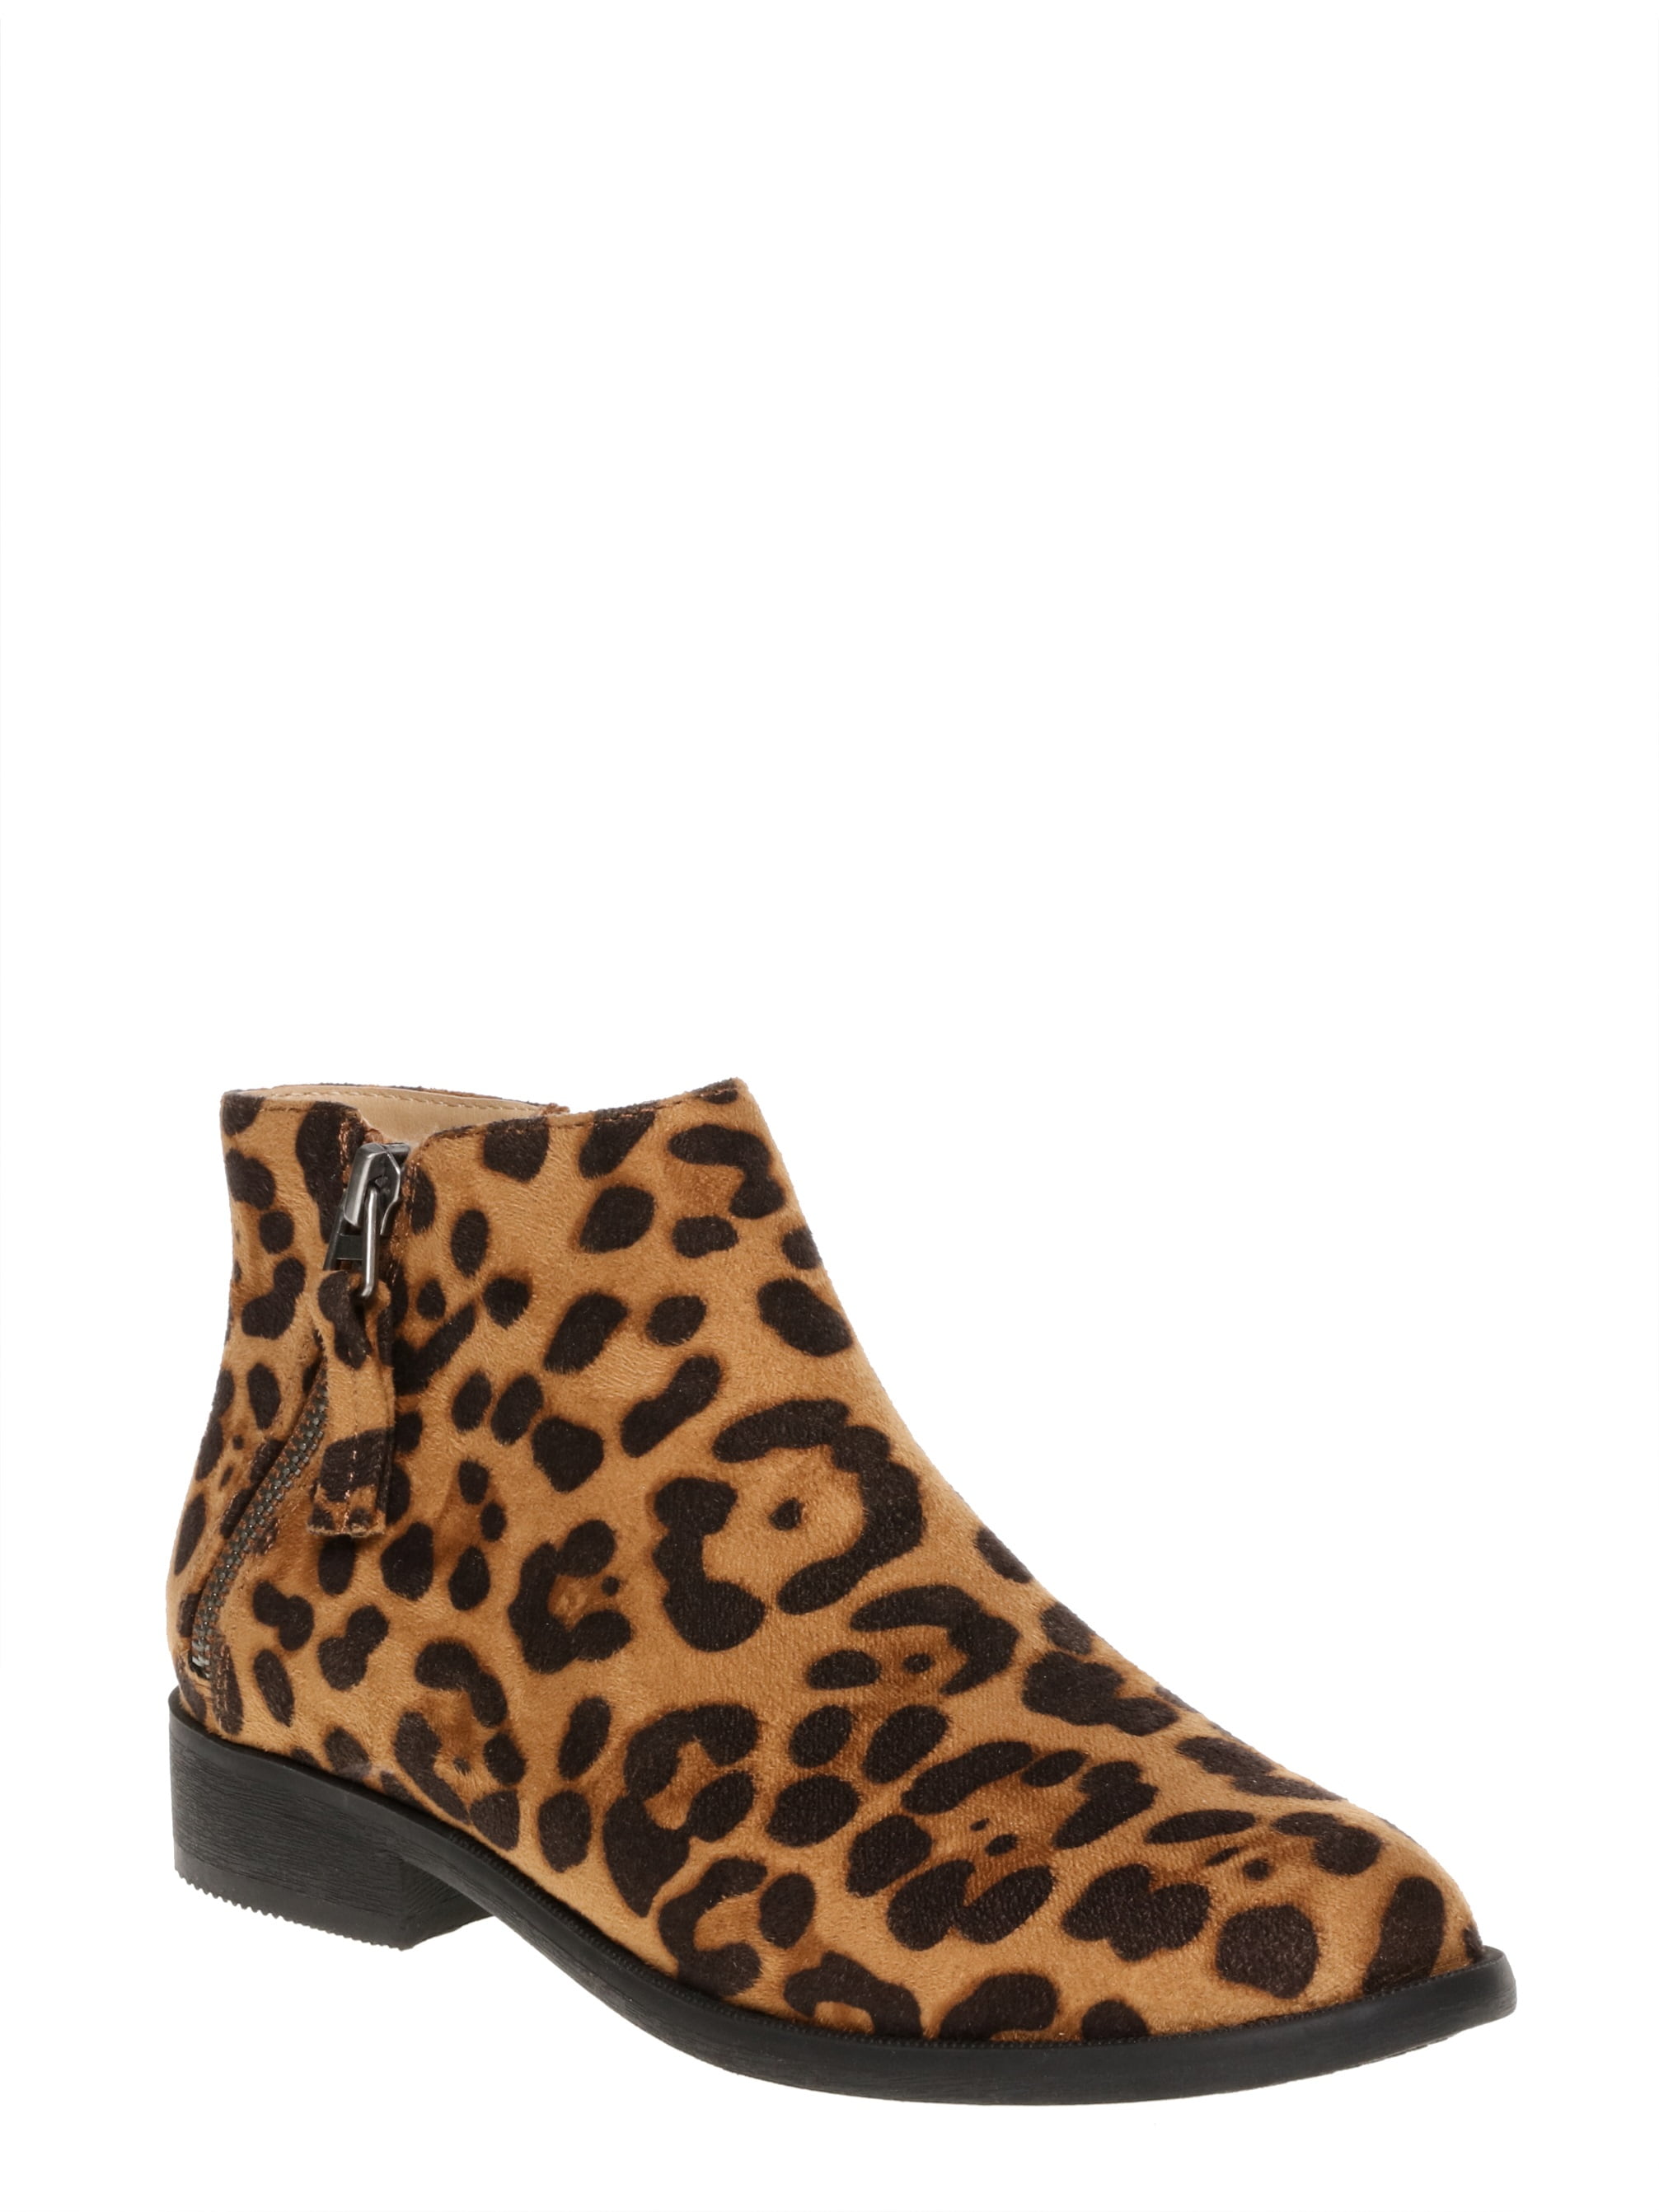 walmart leopard boots